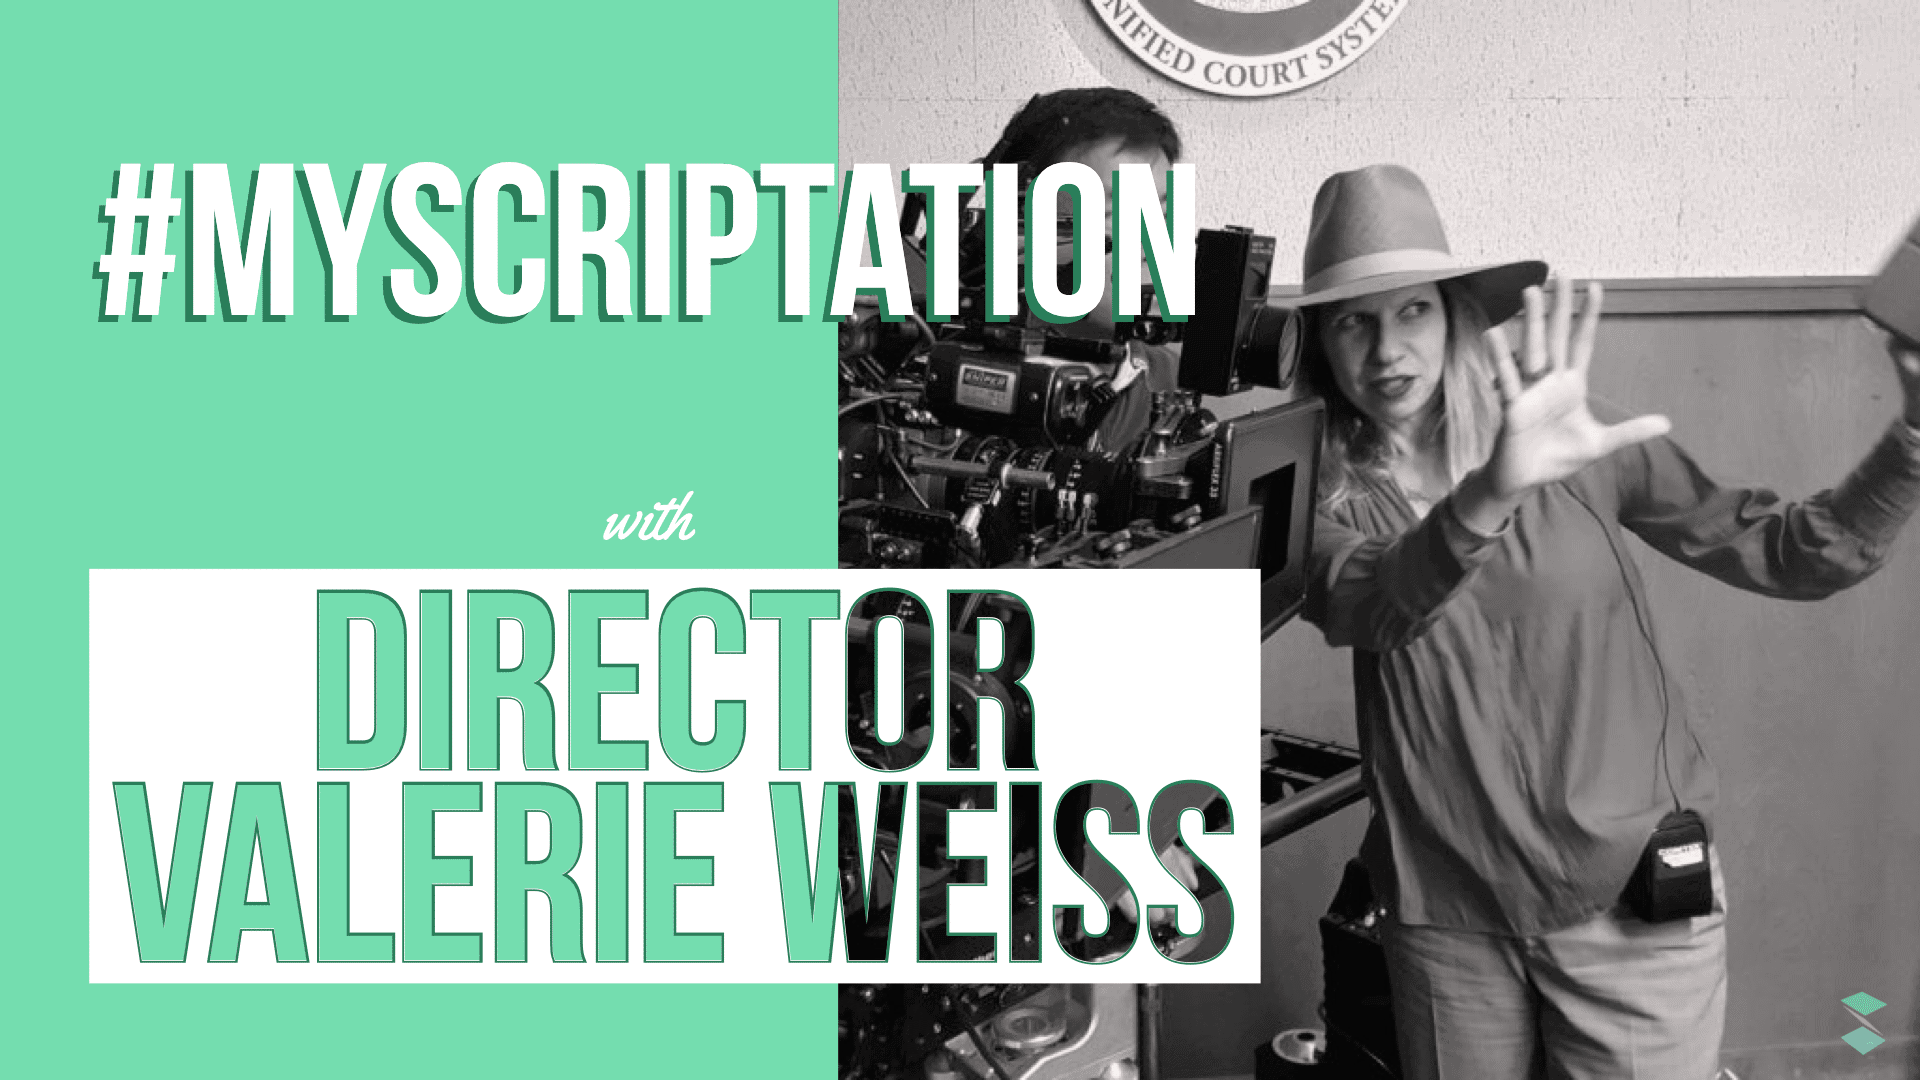 Scriptation-Script-Annotate-TV-Film-Set-MyScriptation-Valerie-Weiss-Director